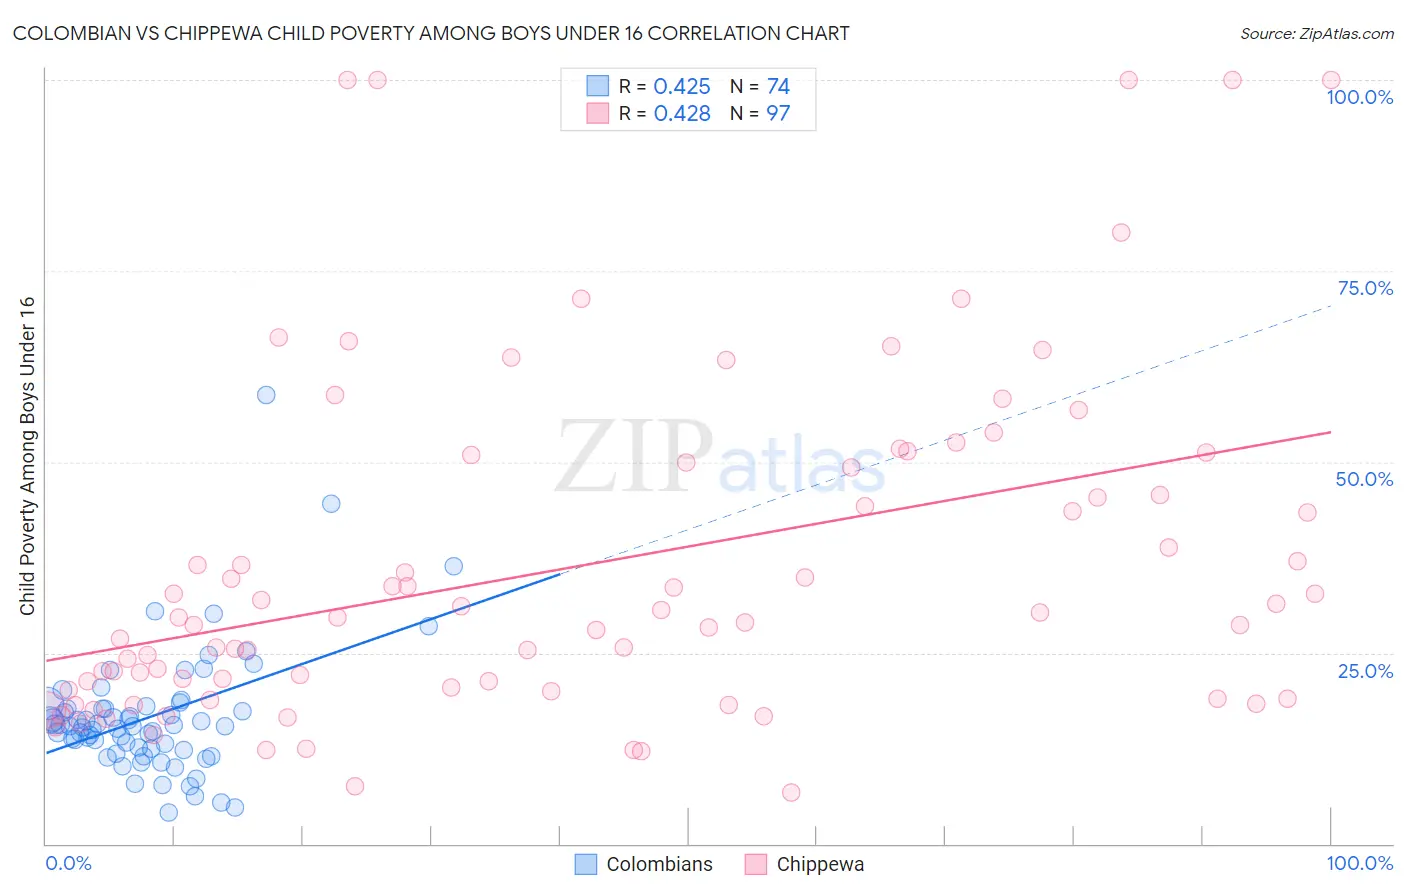 Colombian vs Chippewa Child Poverty Among Boys Under 16